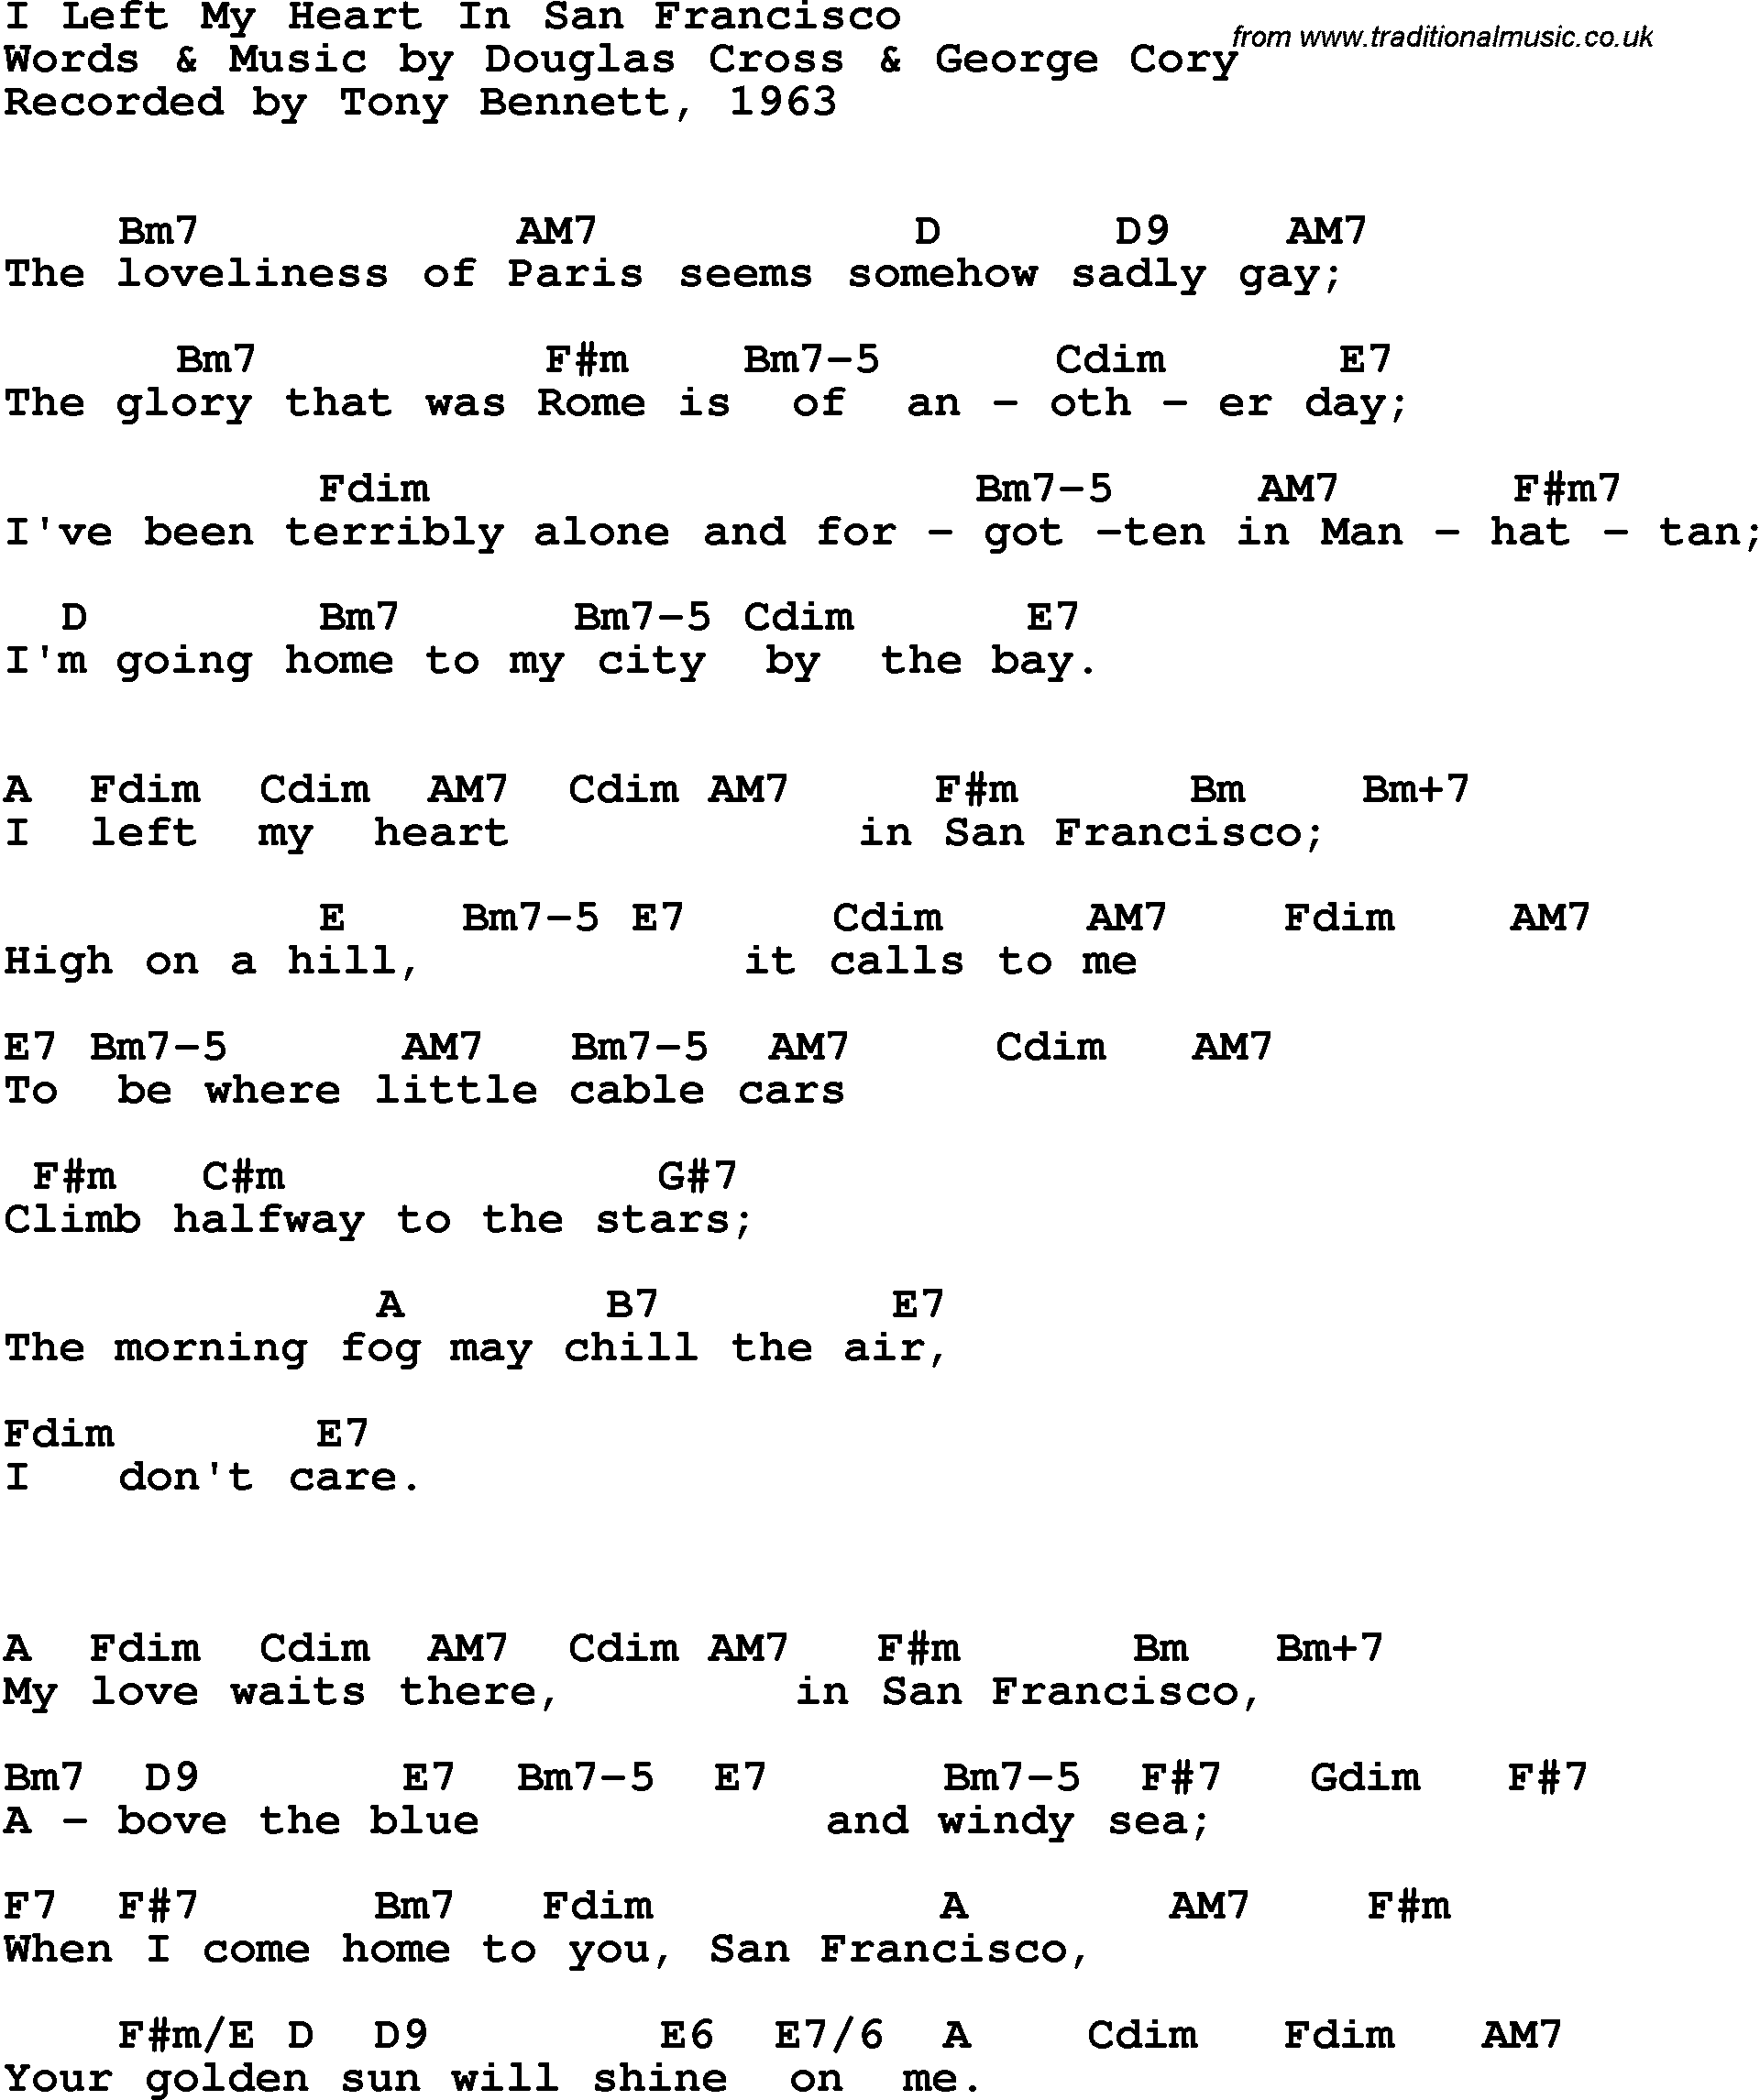 Song Lyrics with guitar chords for I Left My Heart In San Francisco - Tony Bennett, 1962